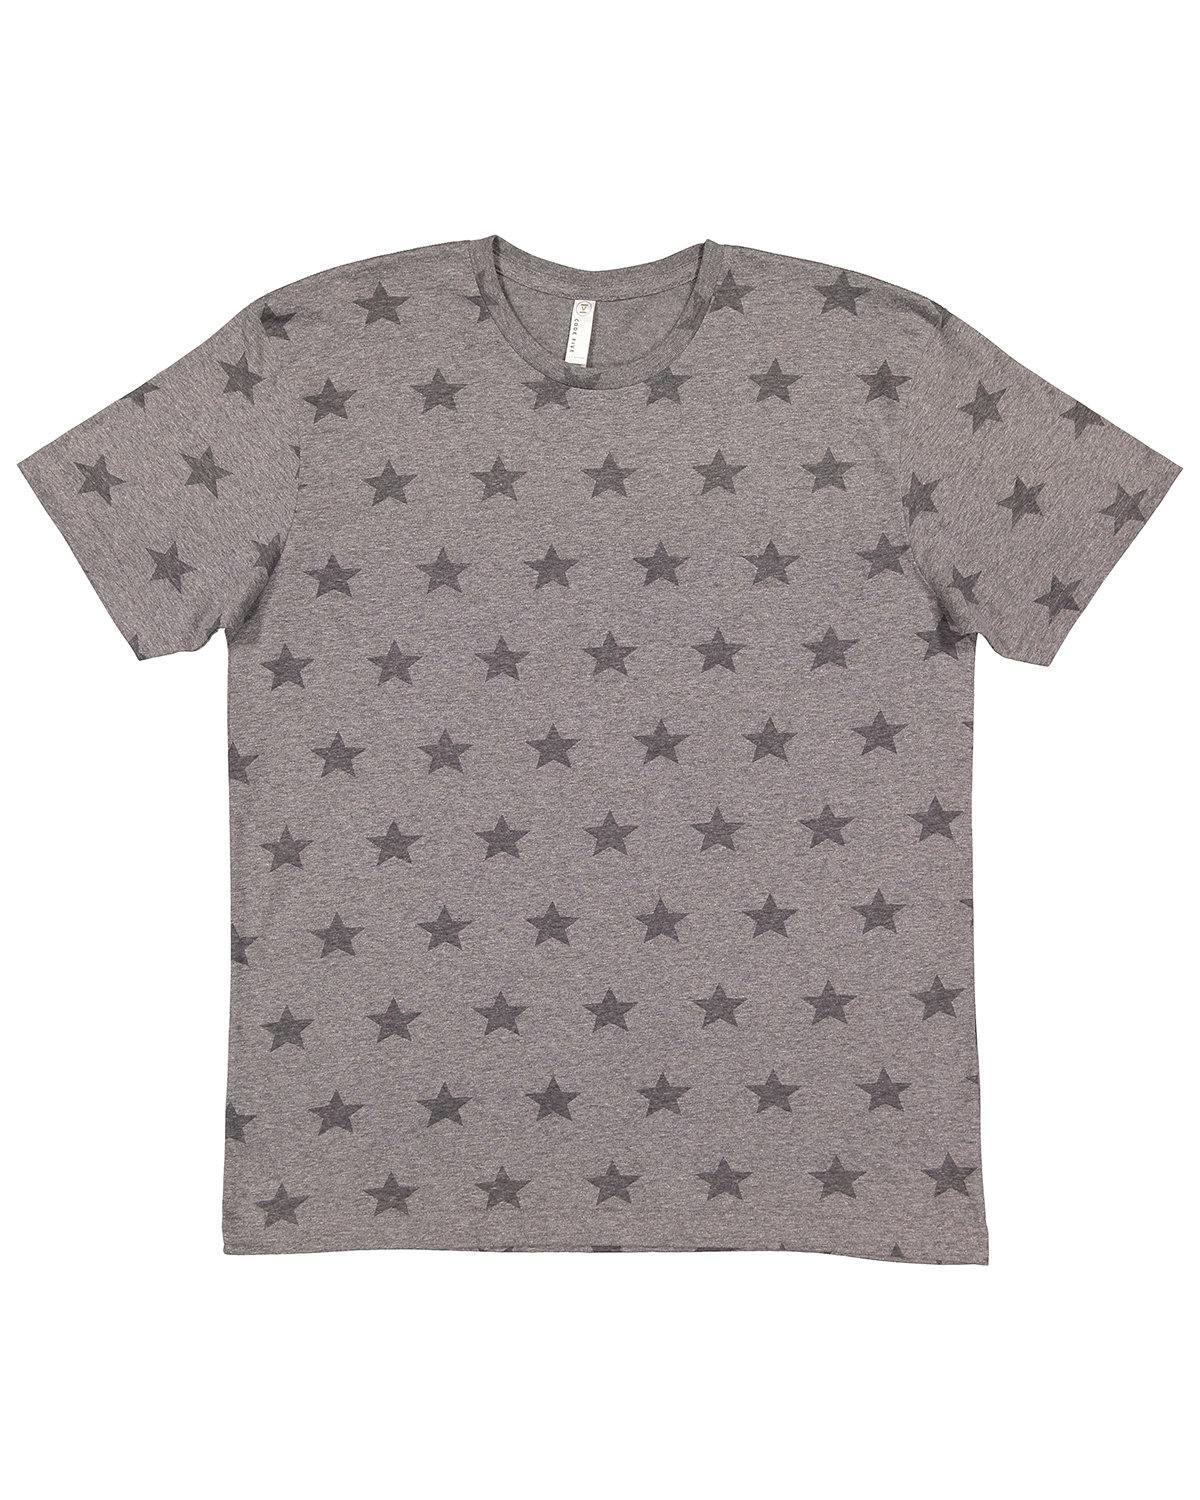 Image for Men's Five Star T-Shirt